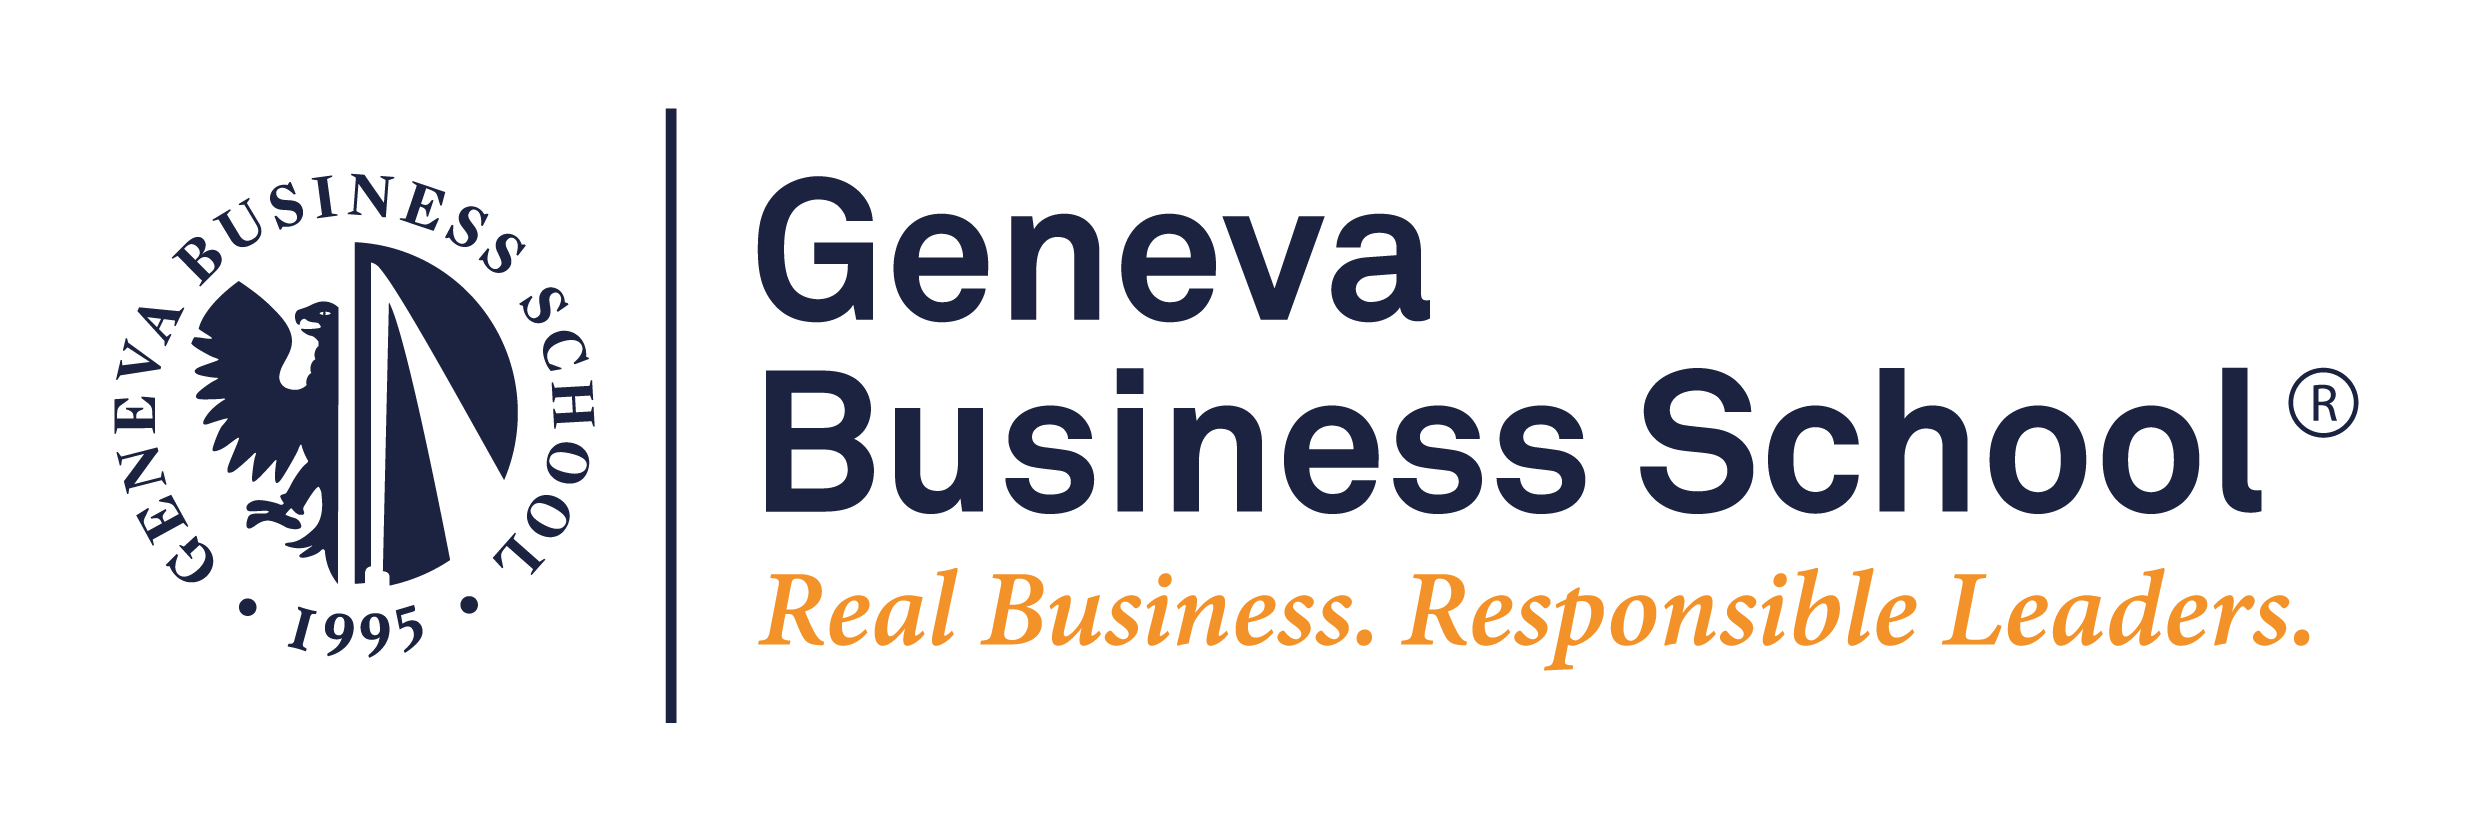 Geneva Business School (Barcelona)